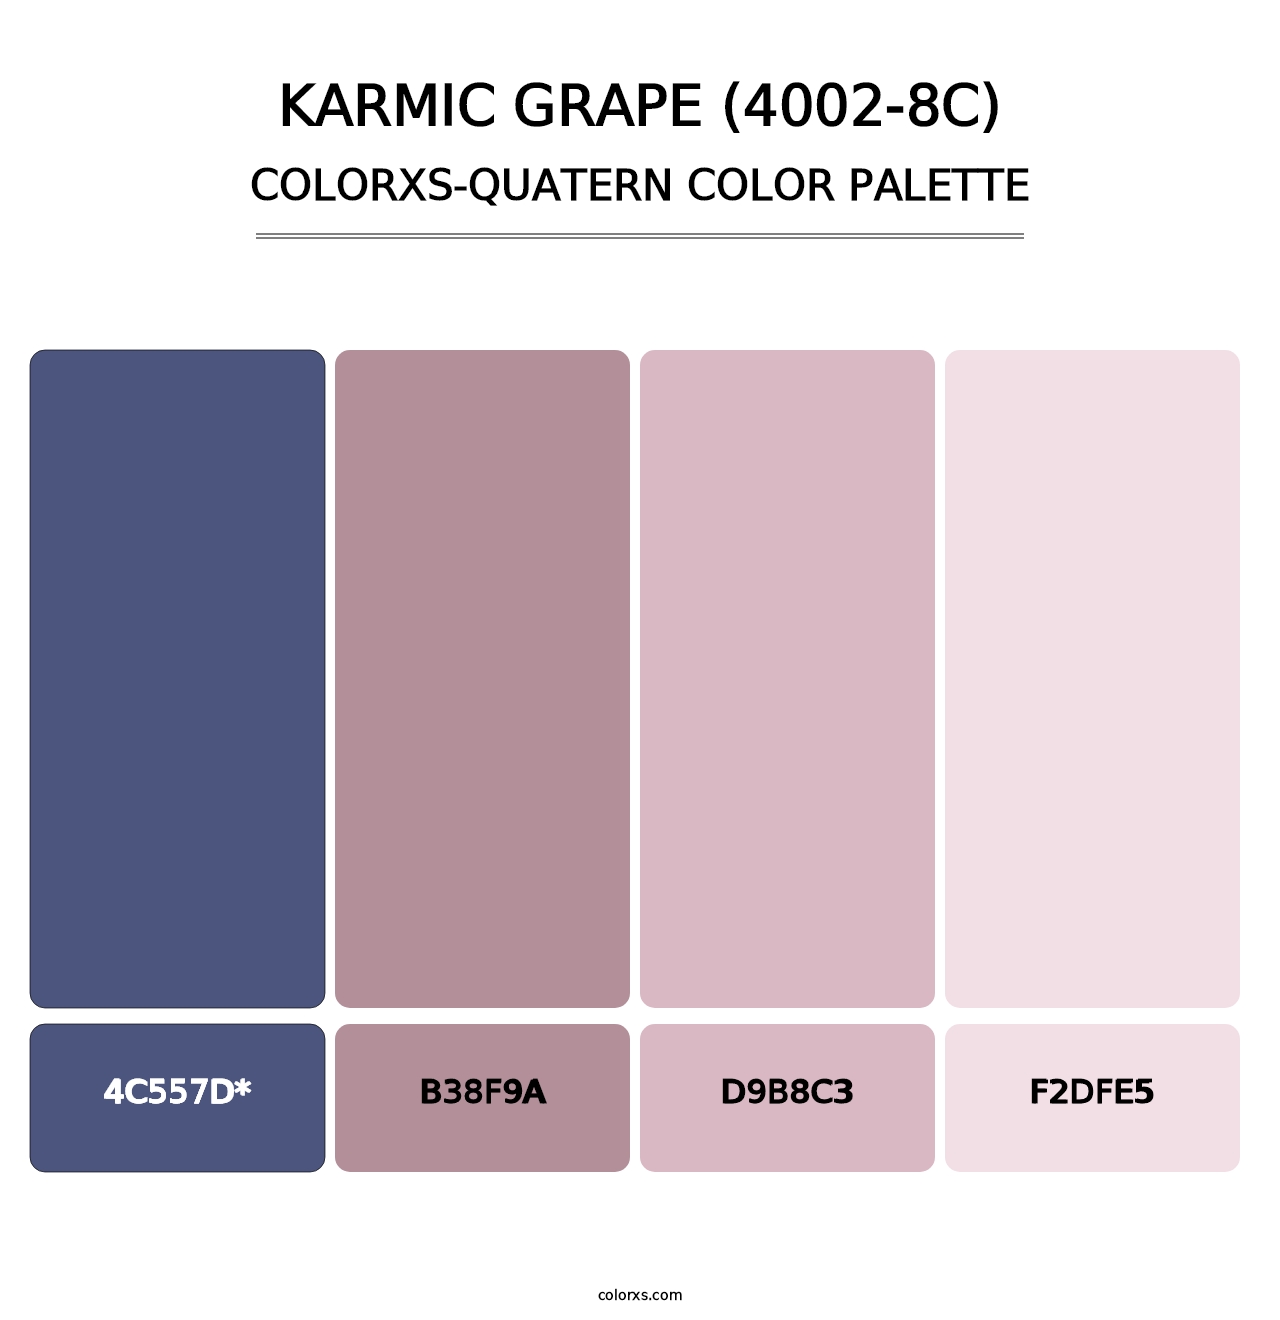 Karmic Grape (4002-8C) - Colorxs Quatern Palette